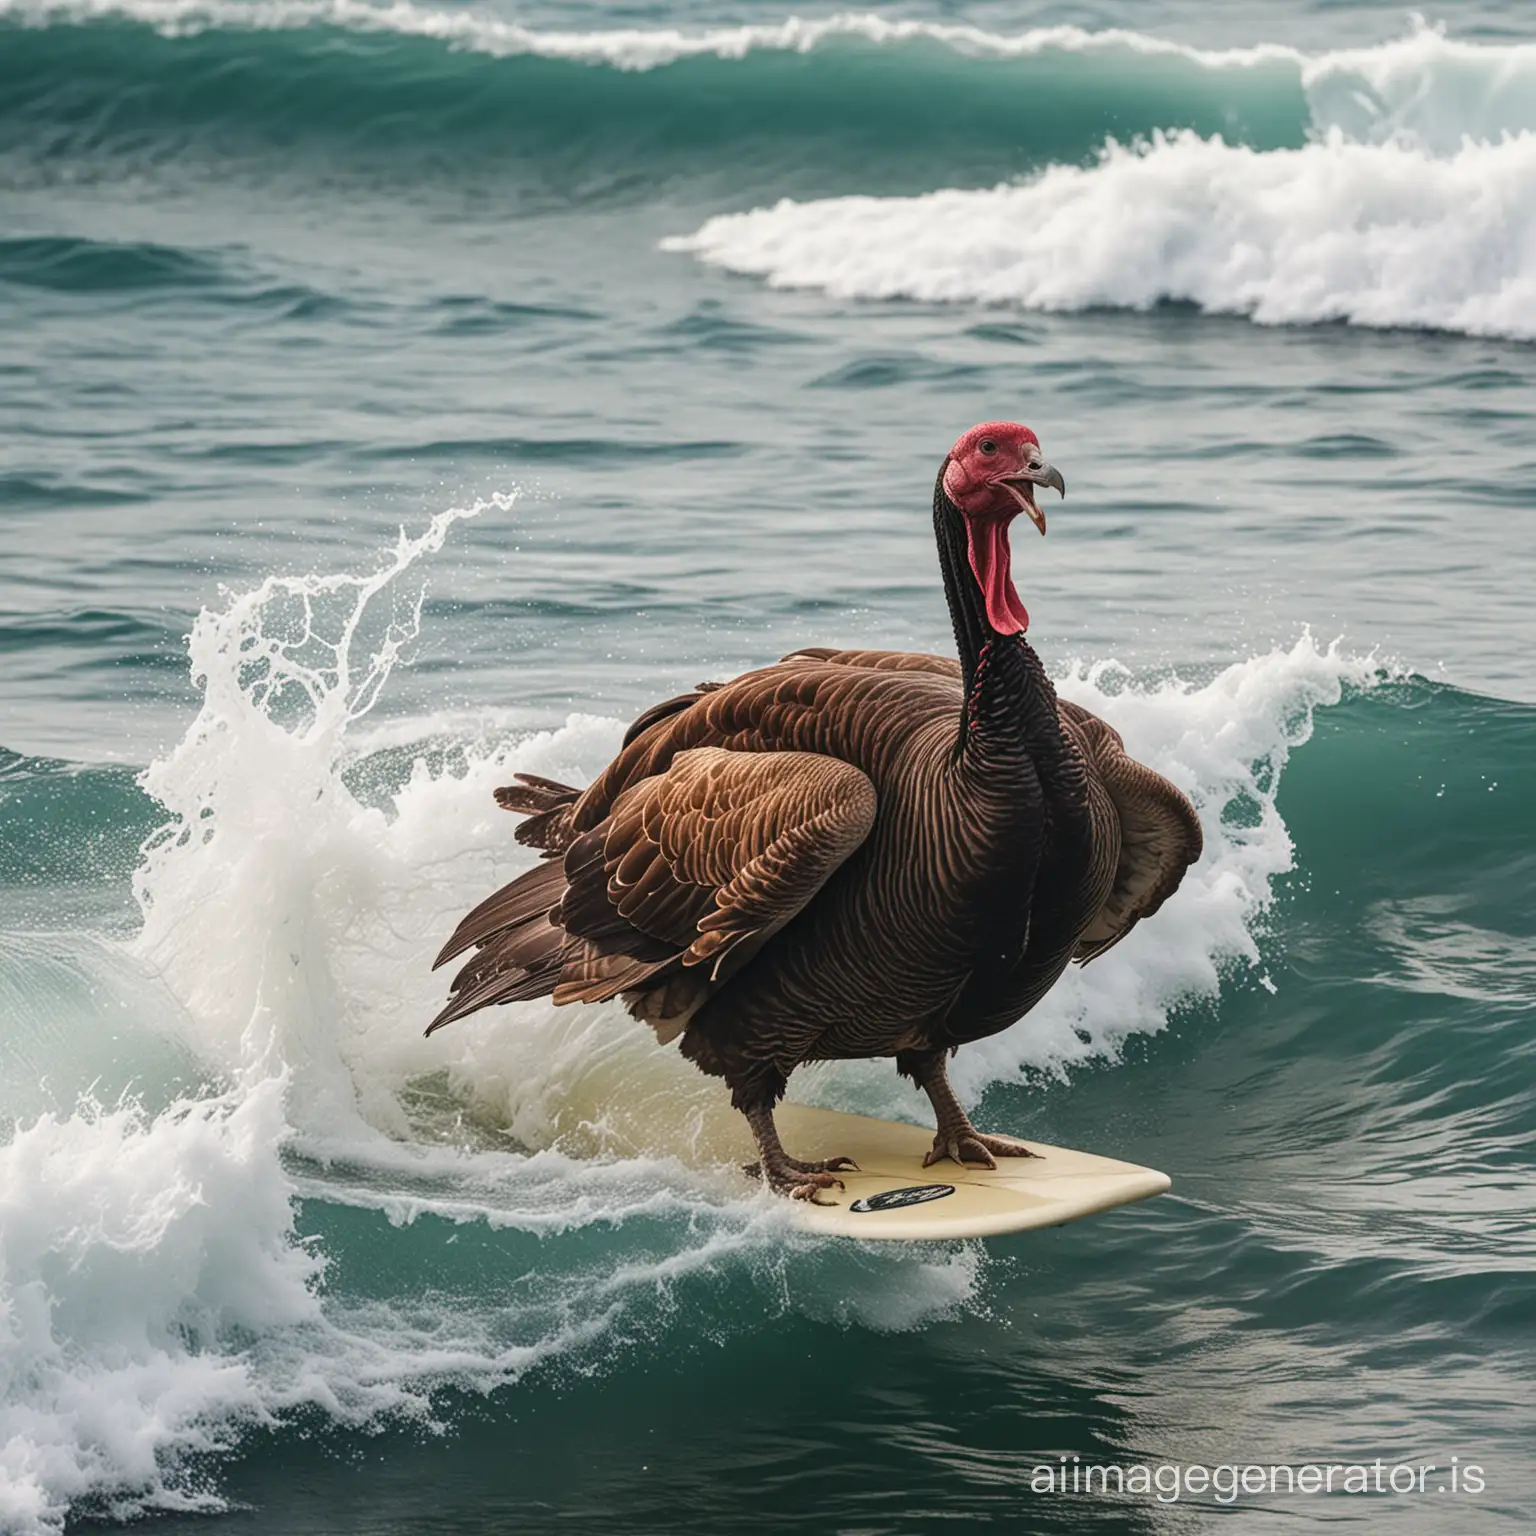 Adventurous-Turkey-Catching-Waves-in-the-Ocean